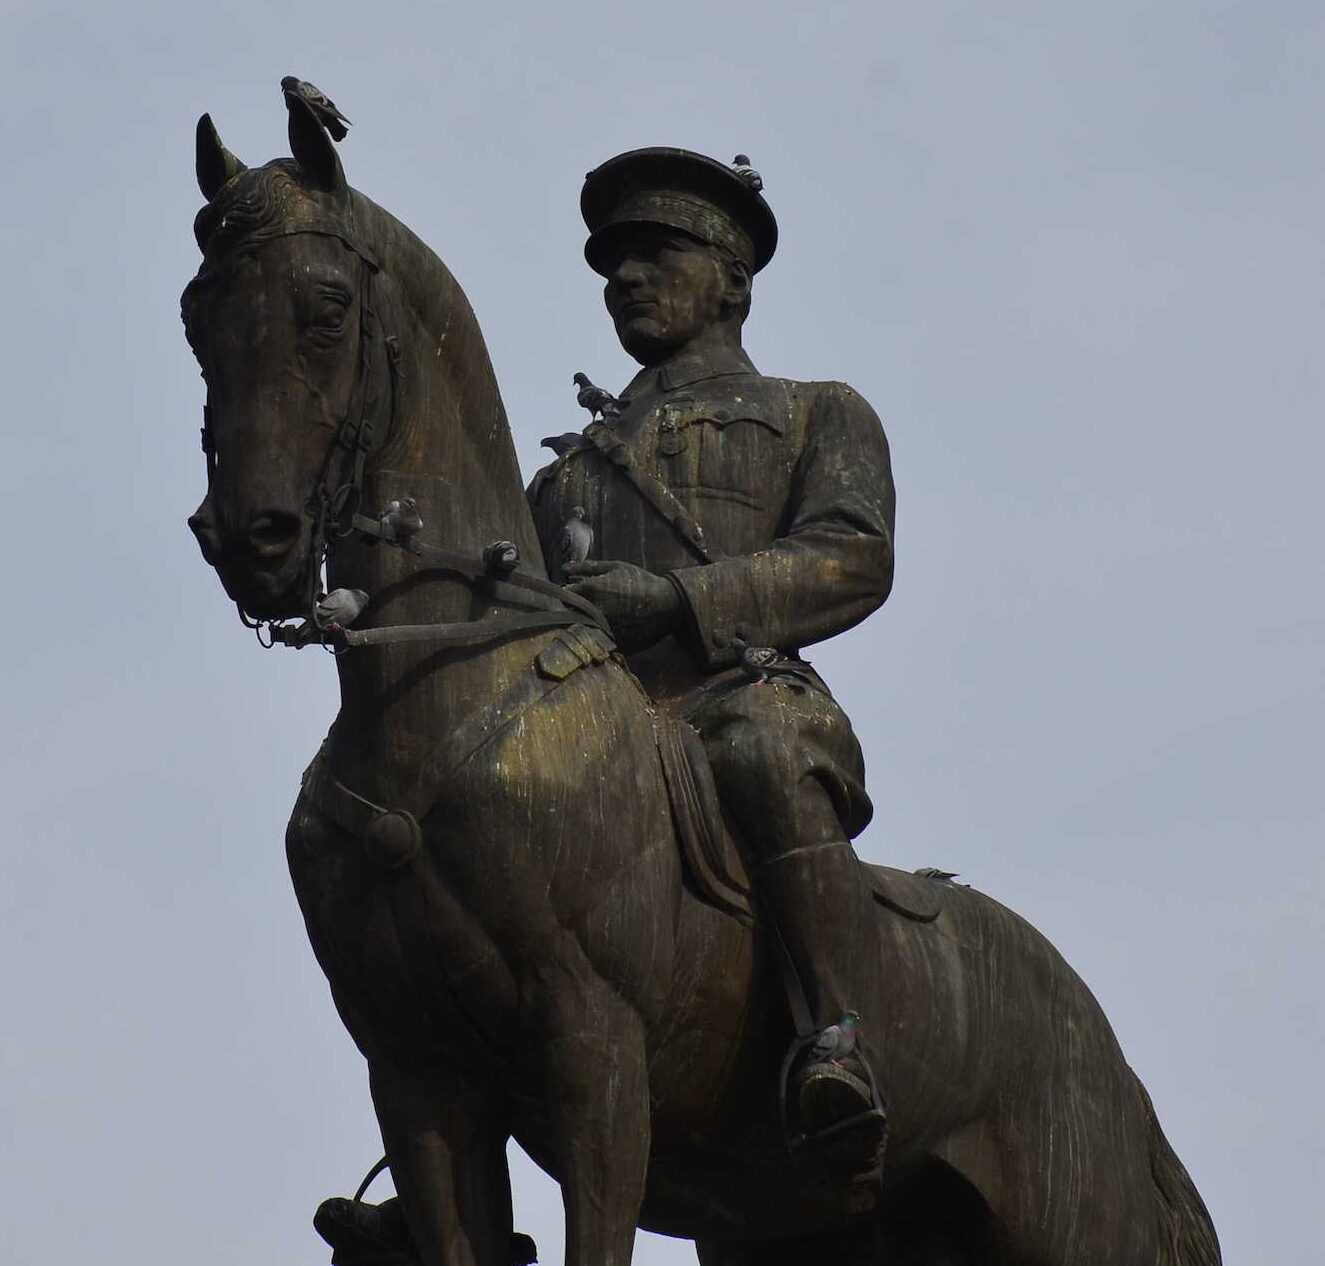 Atatürk statue on the Victory Monument